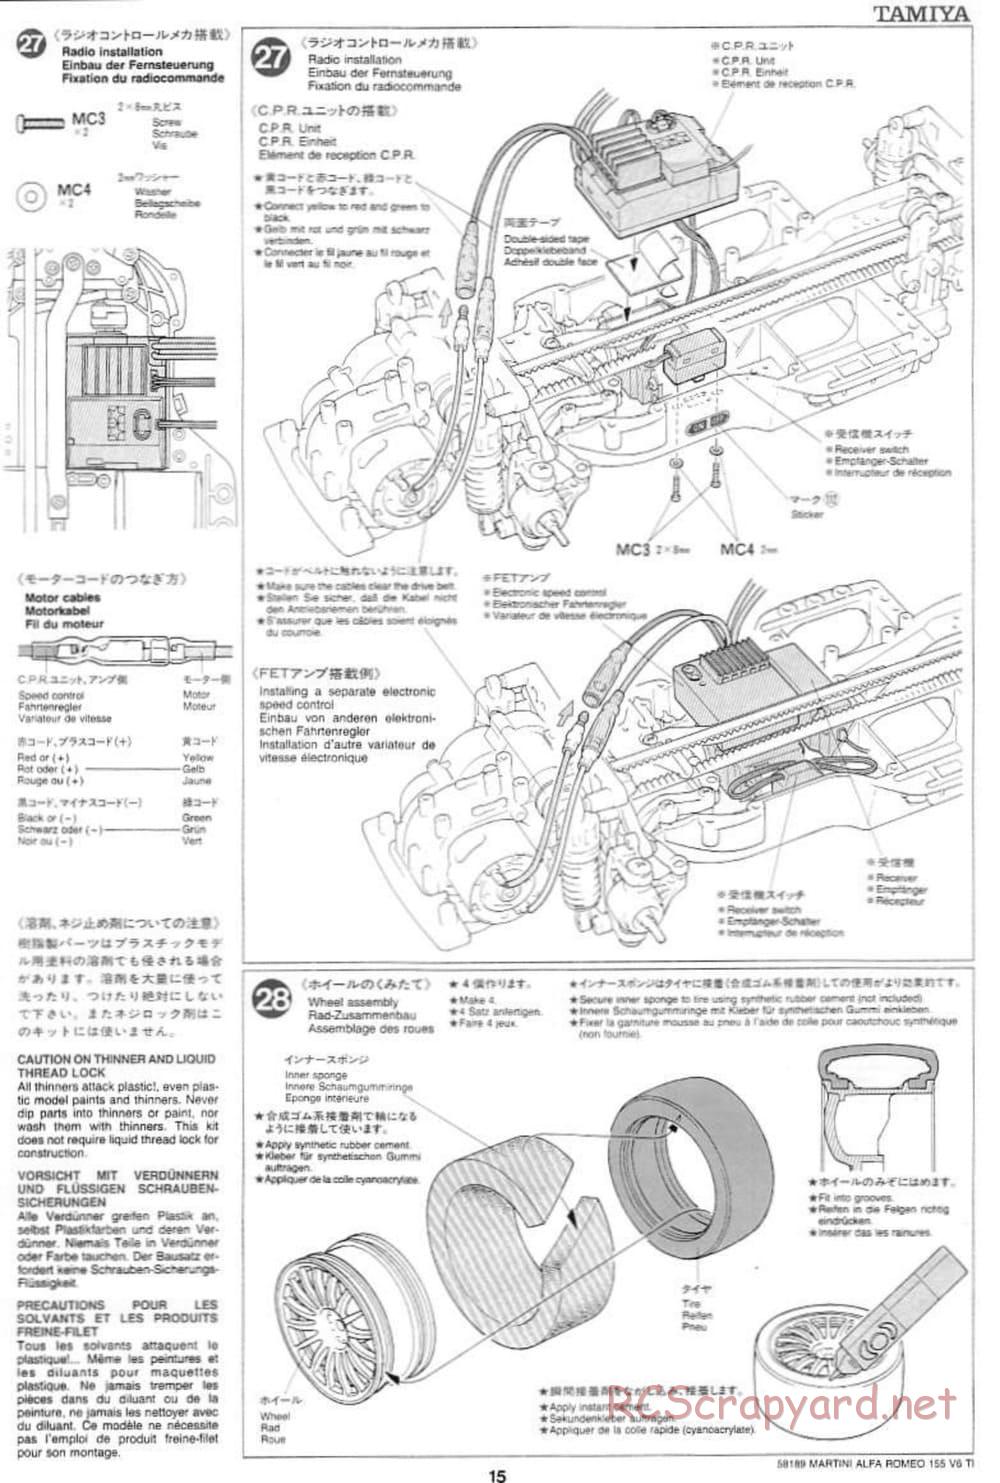 Tamiya - Martini Alfa Romeo 155 V6 TI - TA-03F Chassis - Manual - Page 15